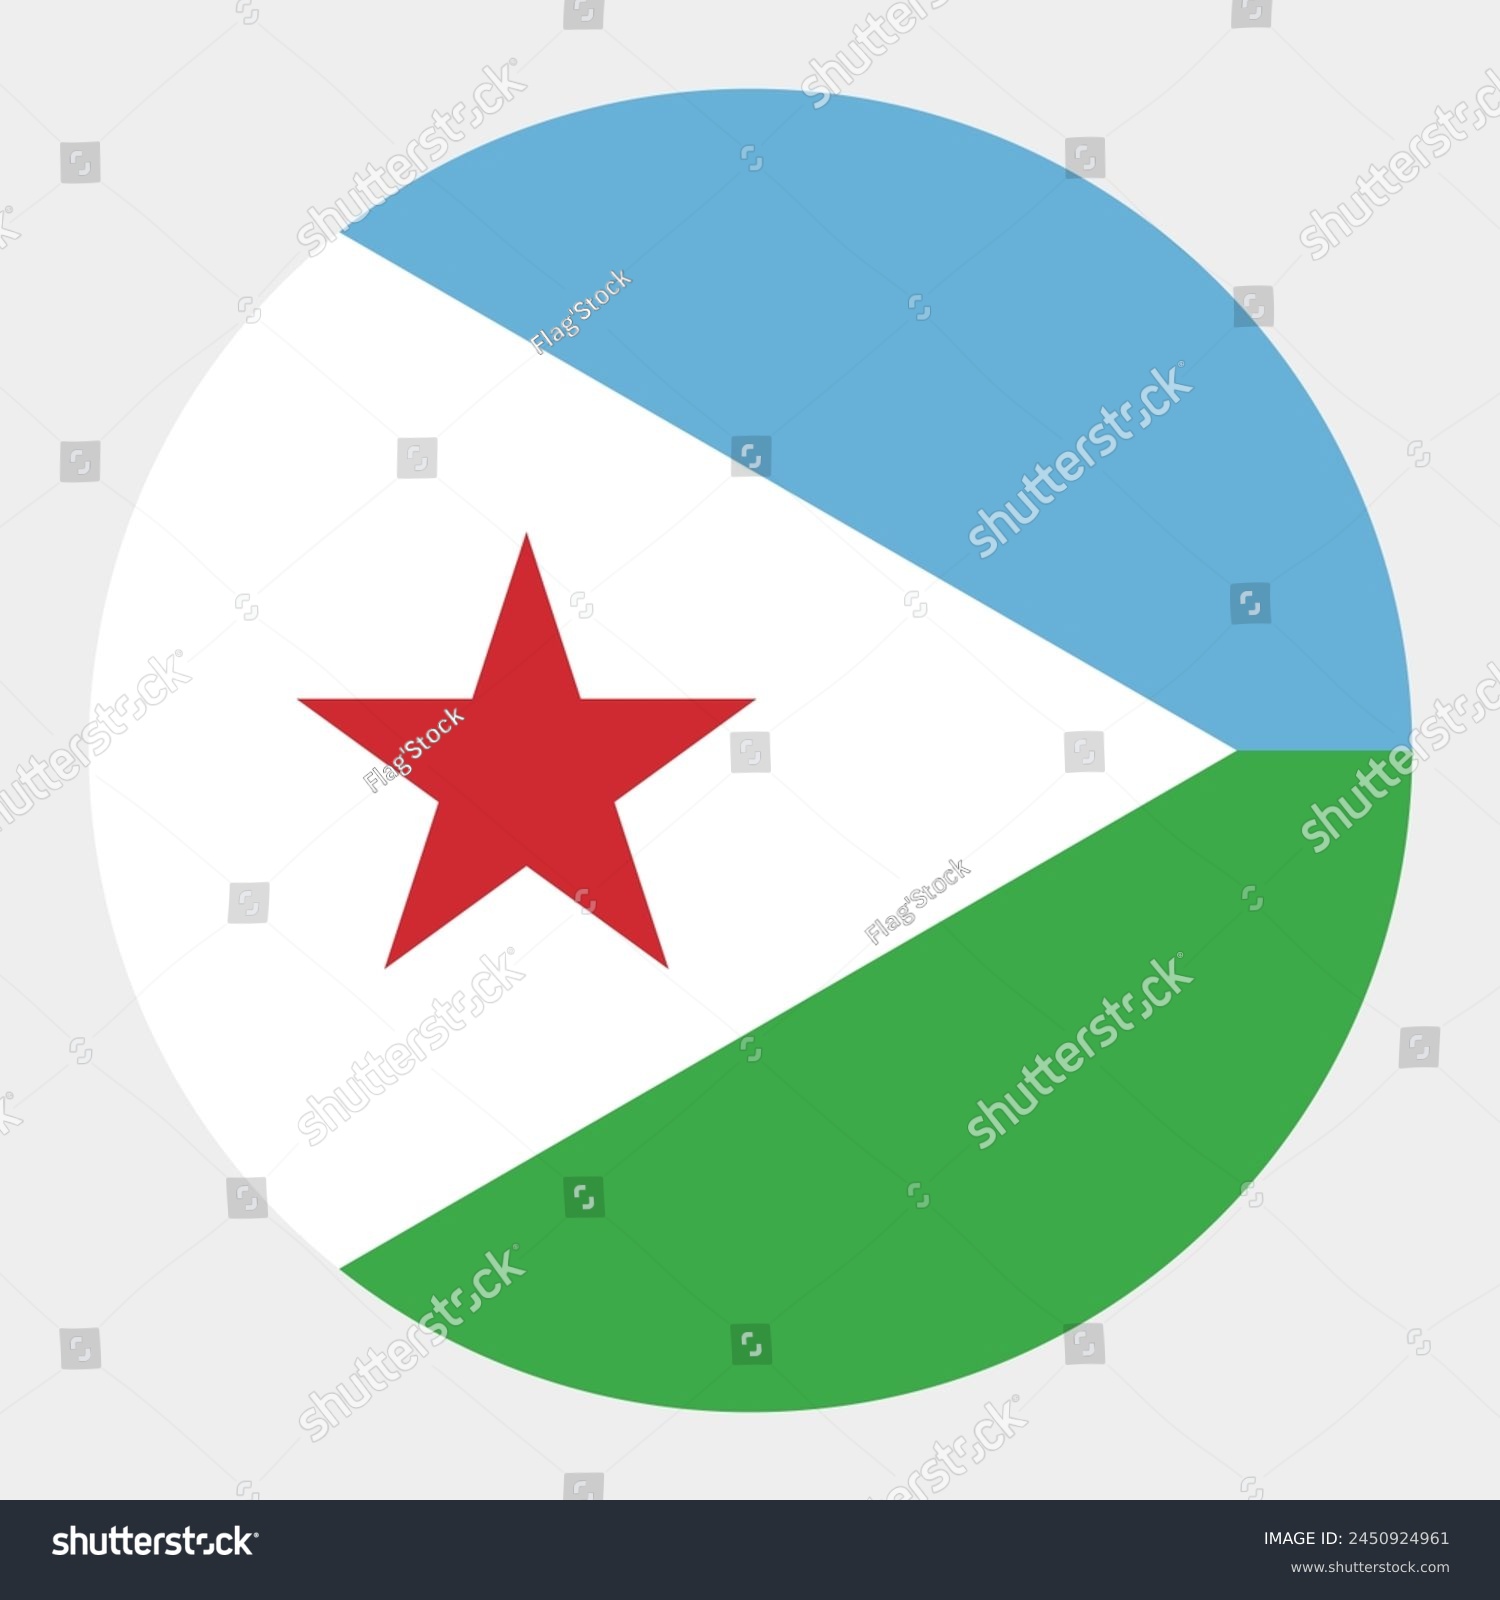 SVG of Djibouti flag. Button flag icon. Standard color. Round button icon. The circle icon. Computer illustration. Digital illustration. Vector illustration. svg